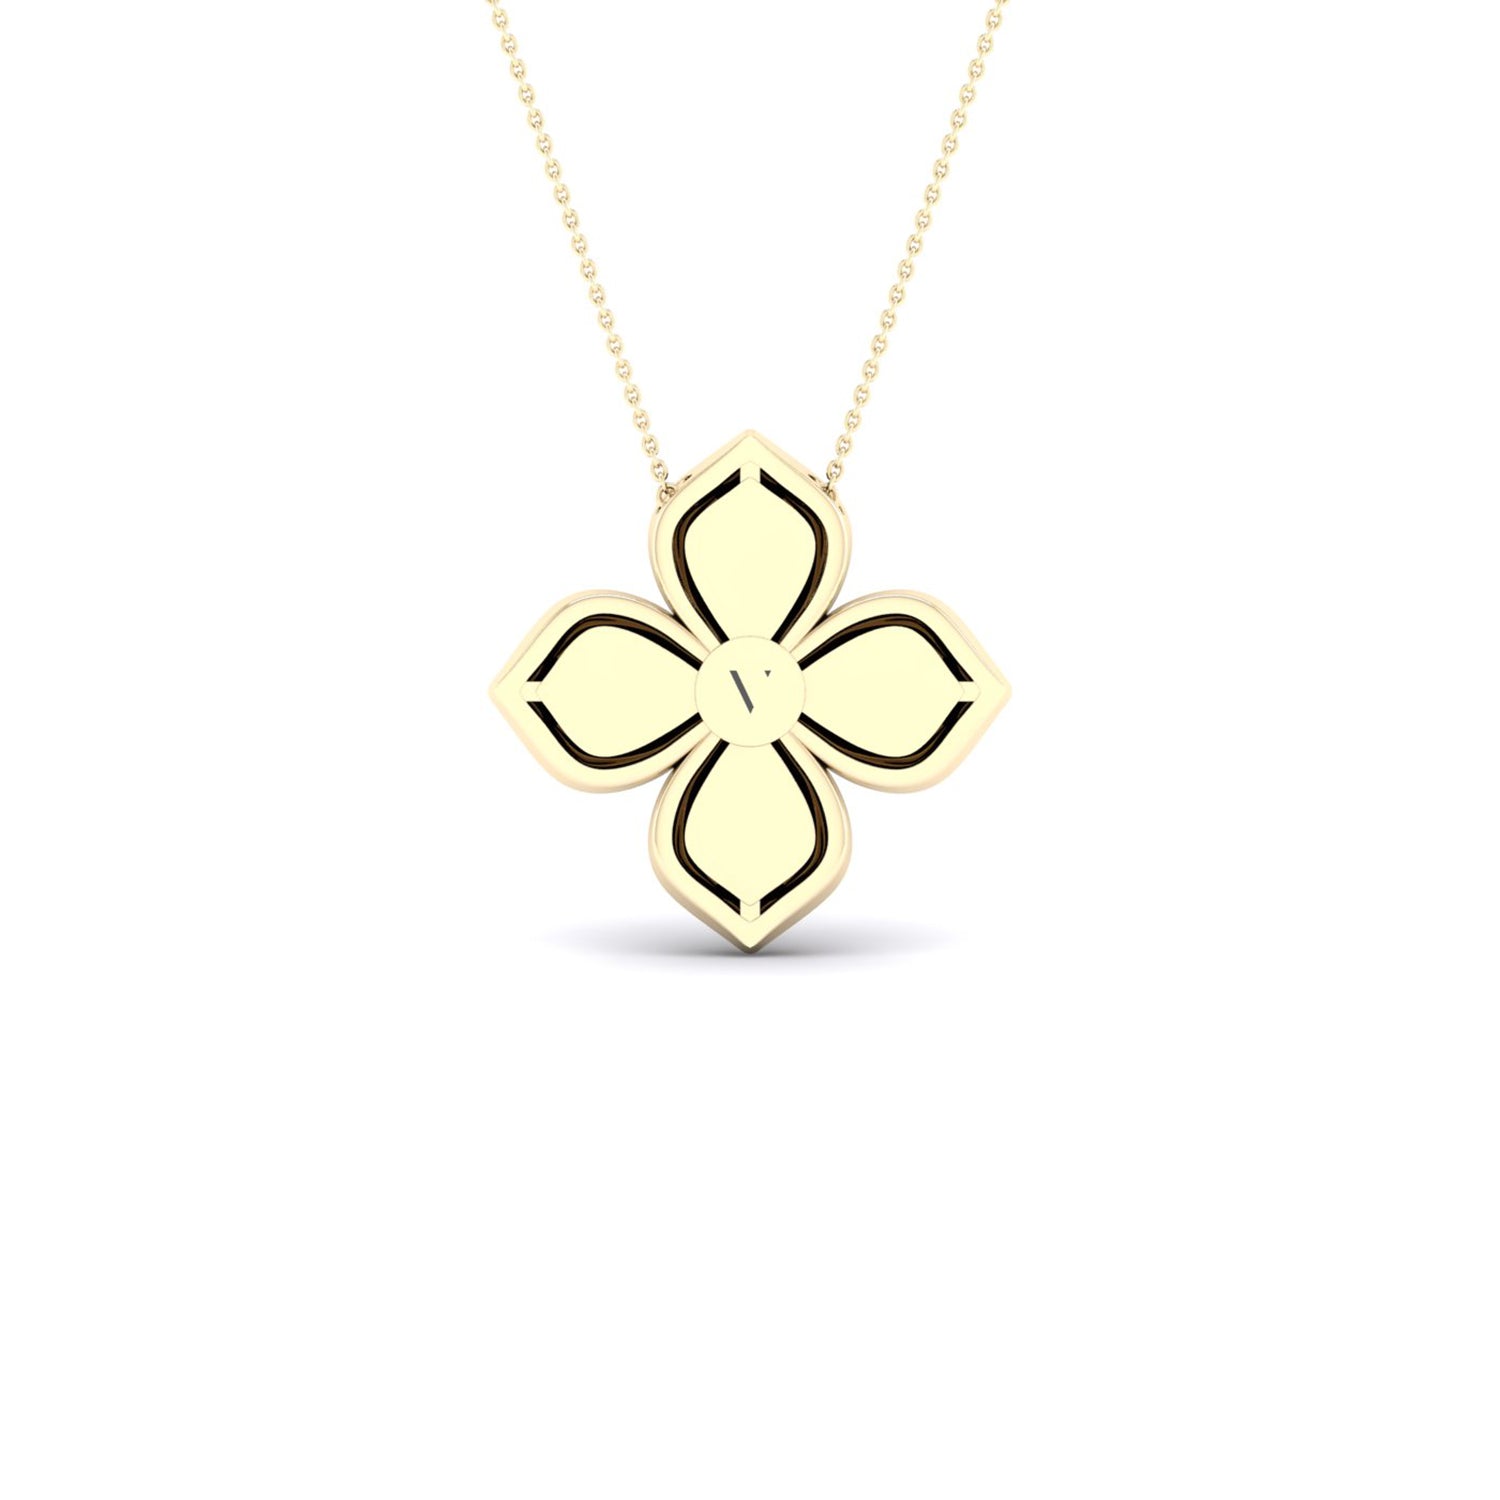 La Fleur Diamond Necklace_Product angle_1/2 Ct. - 3